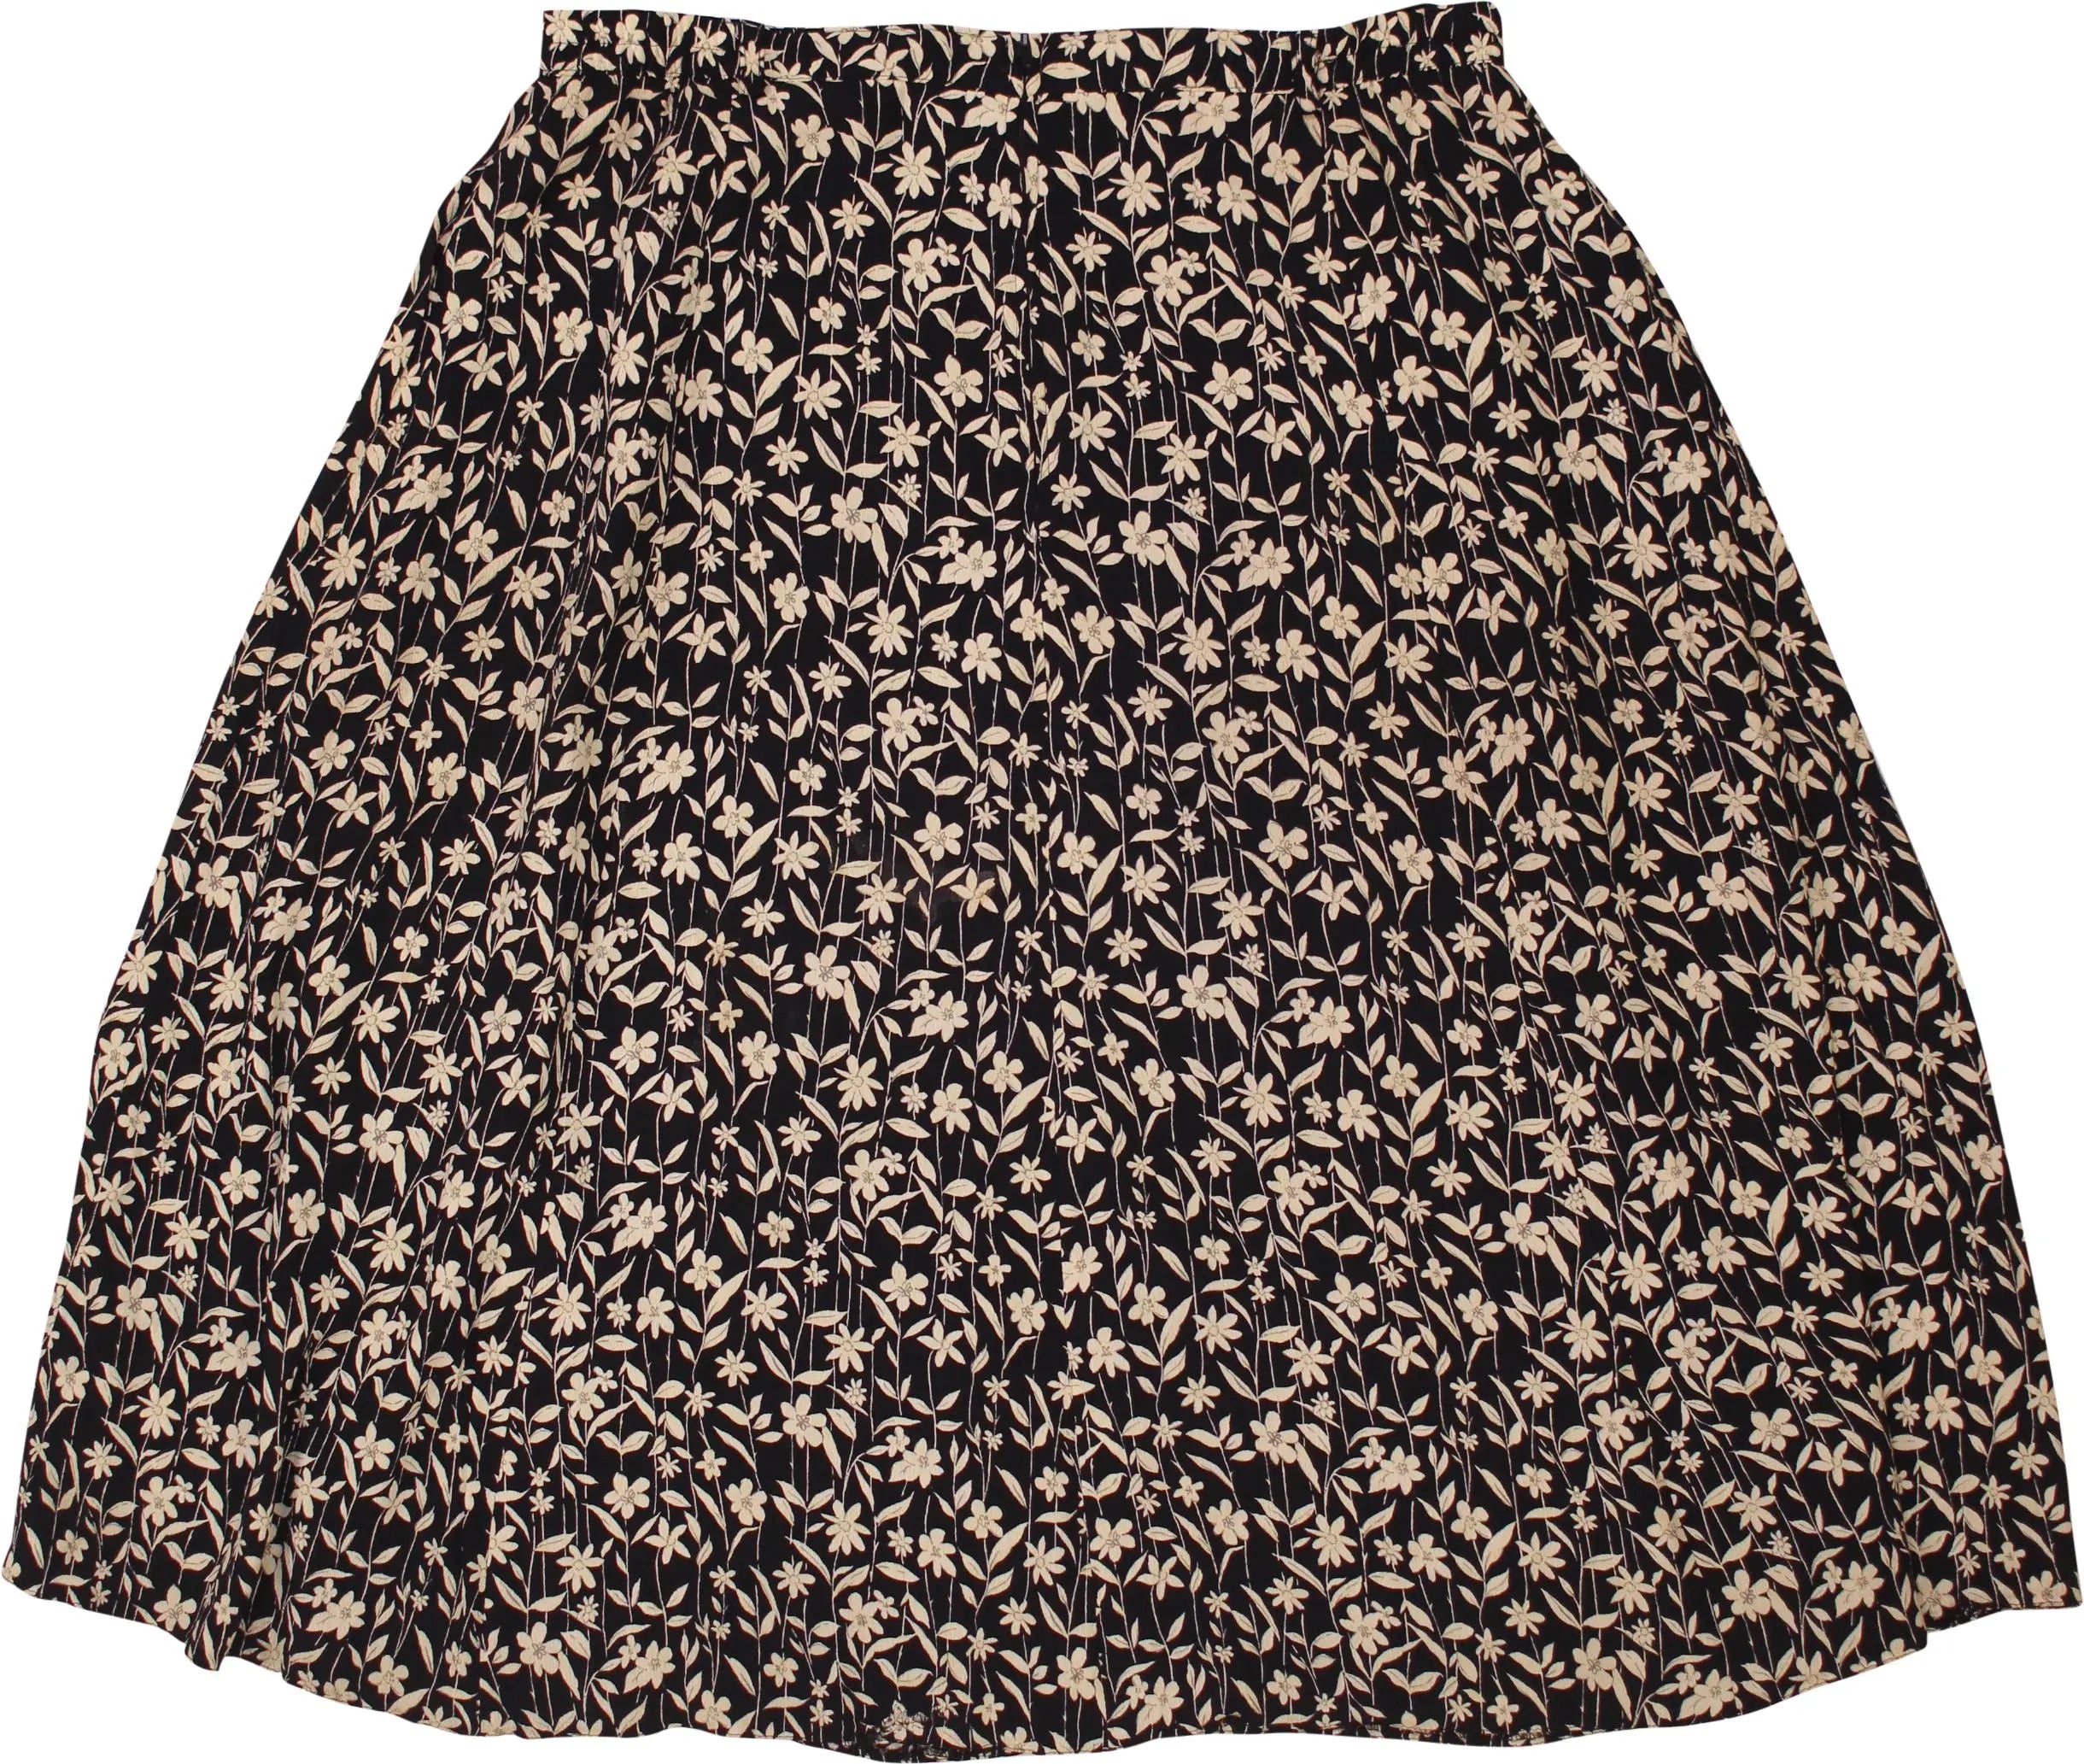 Banken Coordinates - 80s Skirt- ThriftTale.com - Vintage and second handclothing